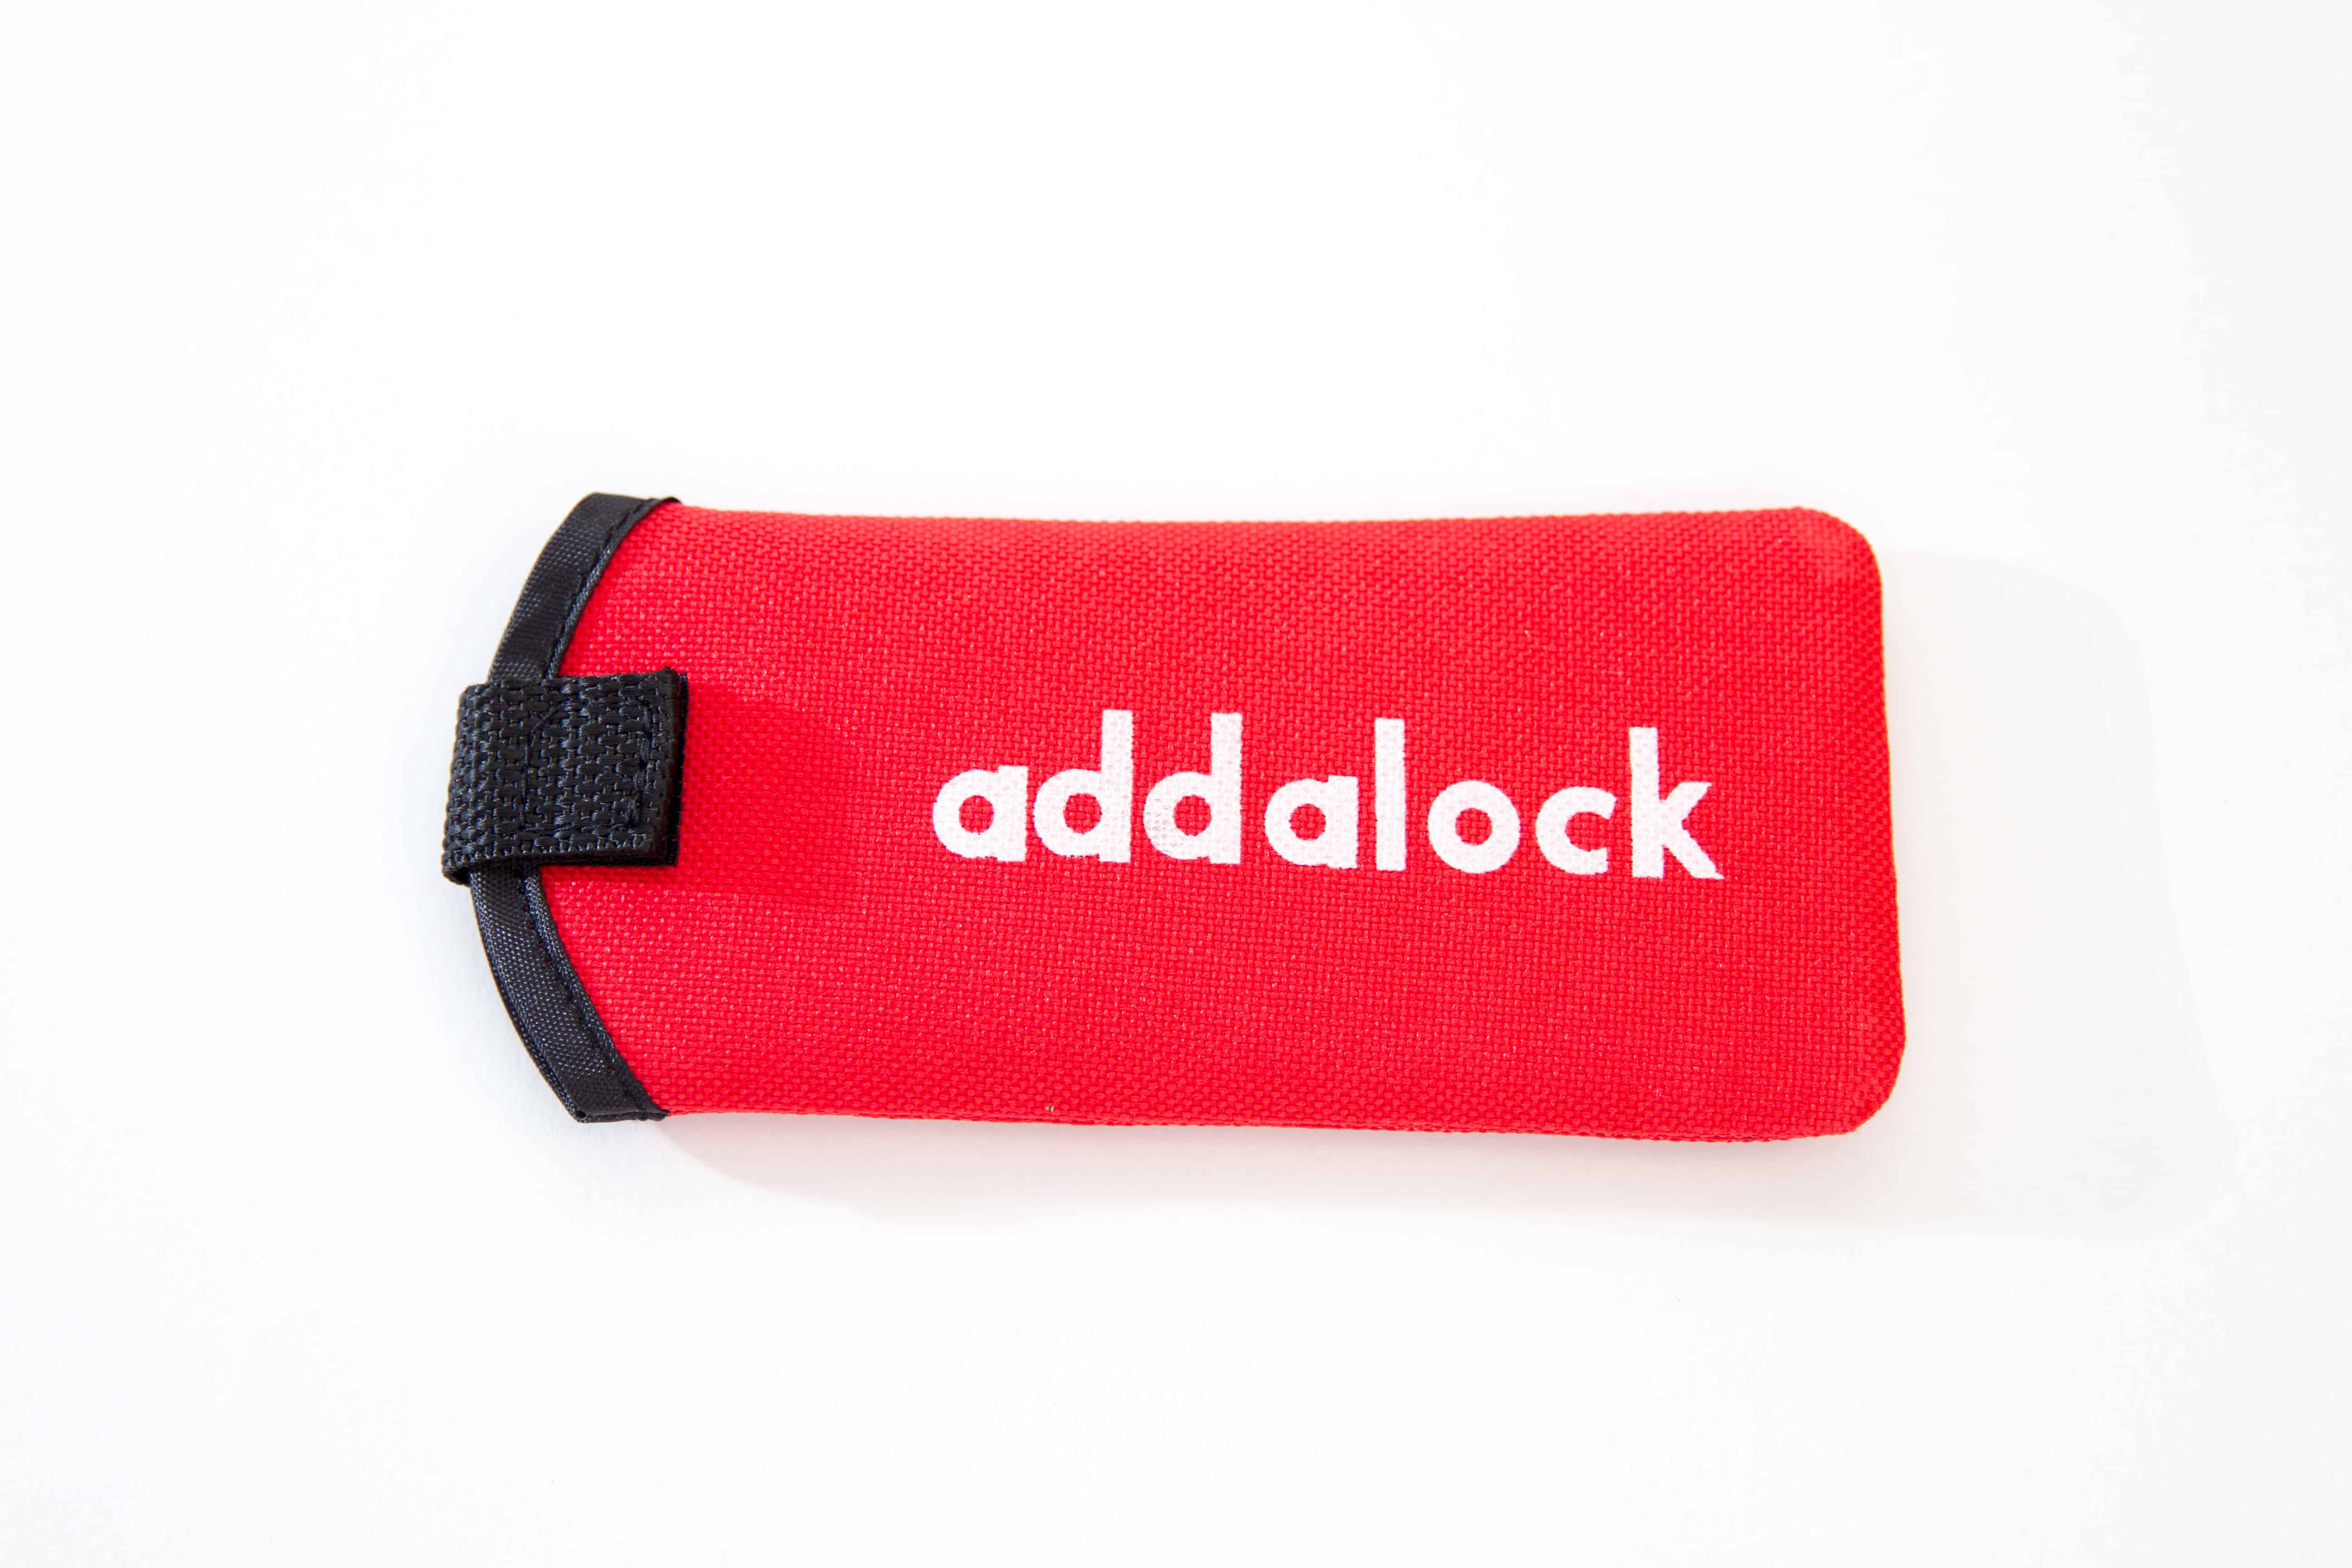 Addalock® (1 Piece) The Original Portable Door Lock, Travel Lock, AirBNB  Lock, School Lockdown Lock. (ASIN: B00186URTY, Product ID: 847552011012,  FNSKU: X0000PGTI3)